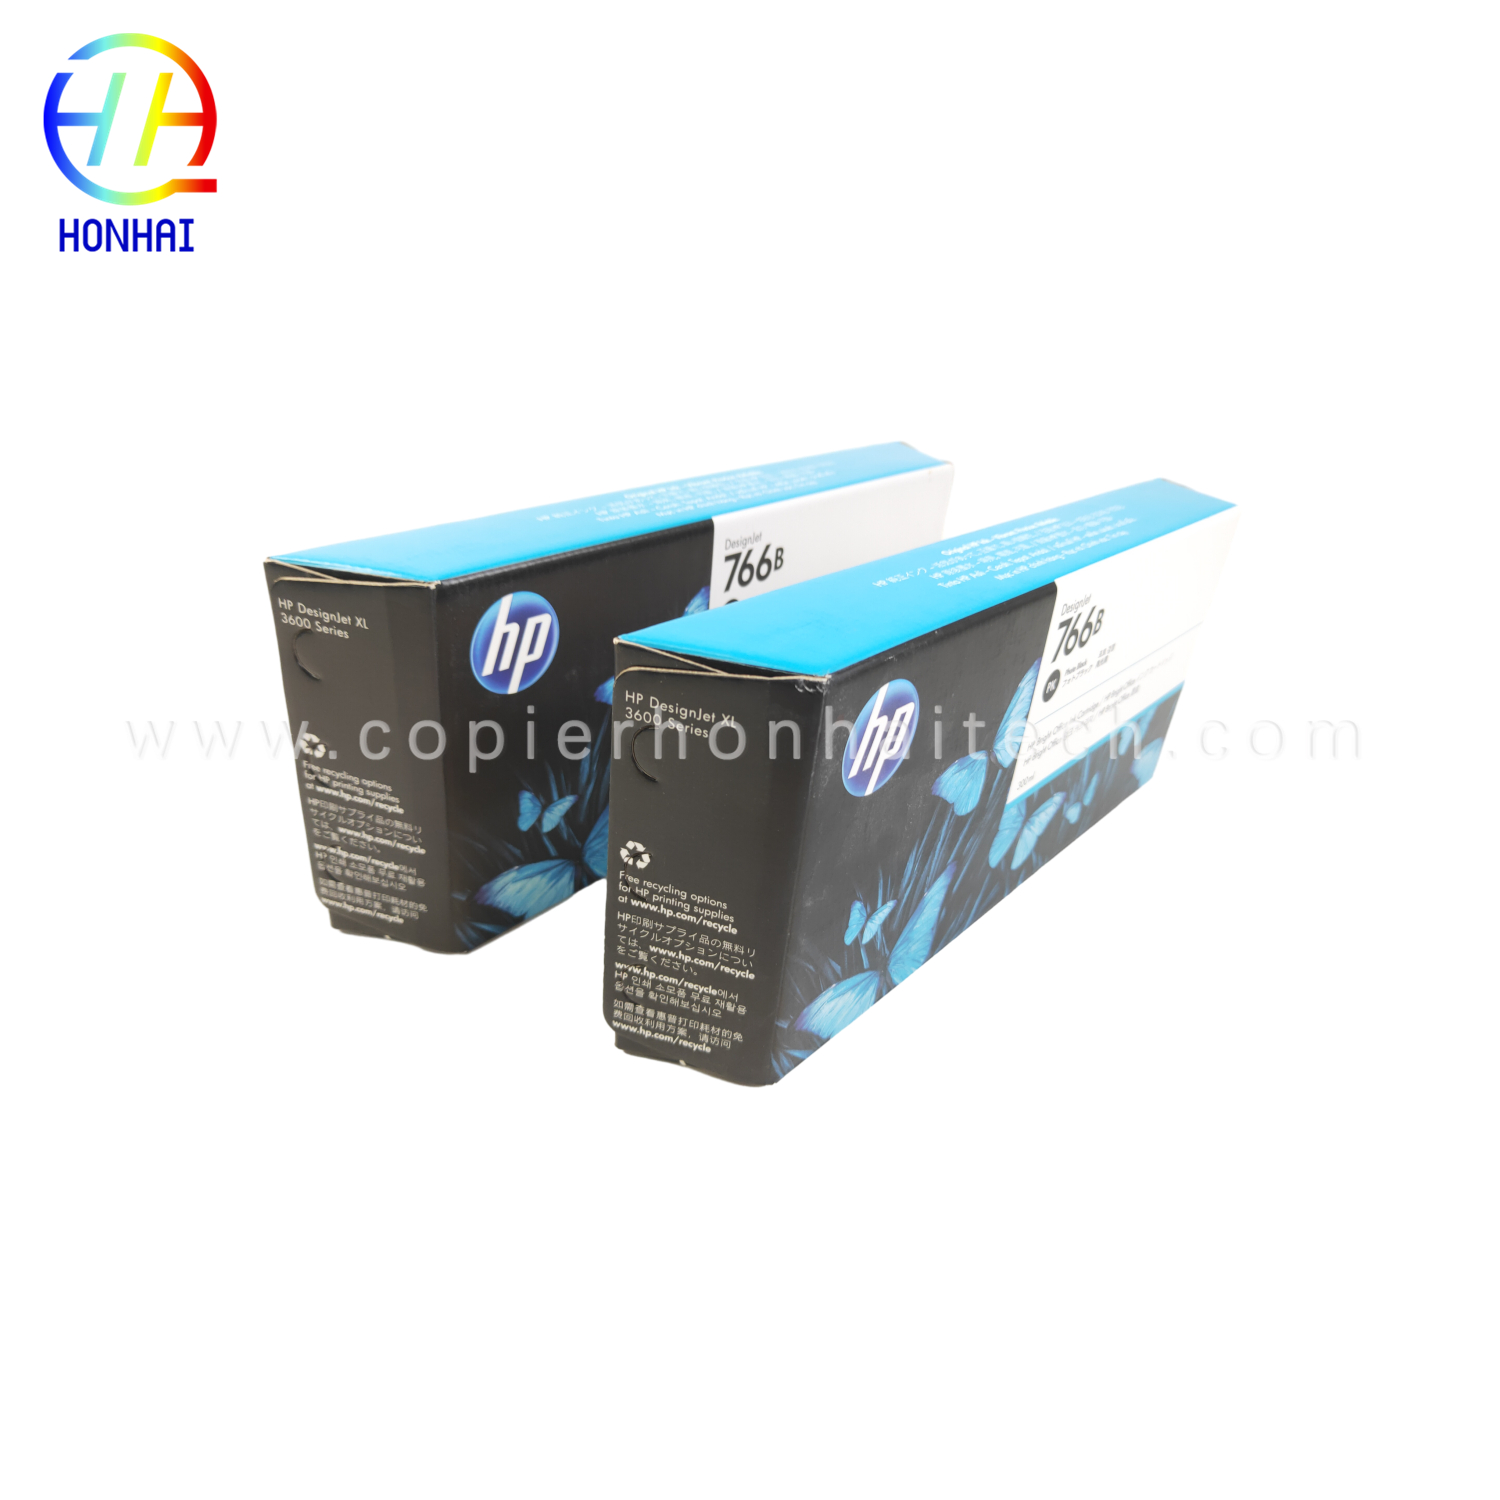 https://www.copierhonhaitech.com/original-ink-cartridge-for-hp-designjet-xl-3600-766-300-ml-matte-black-p2v92a-product/